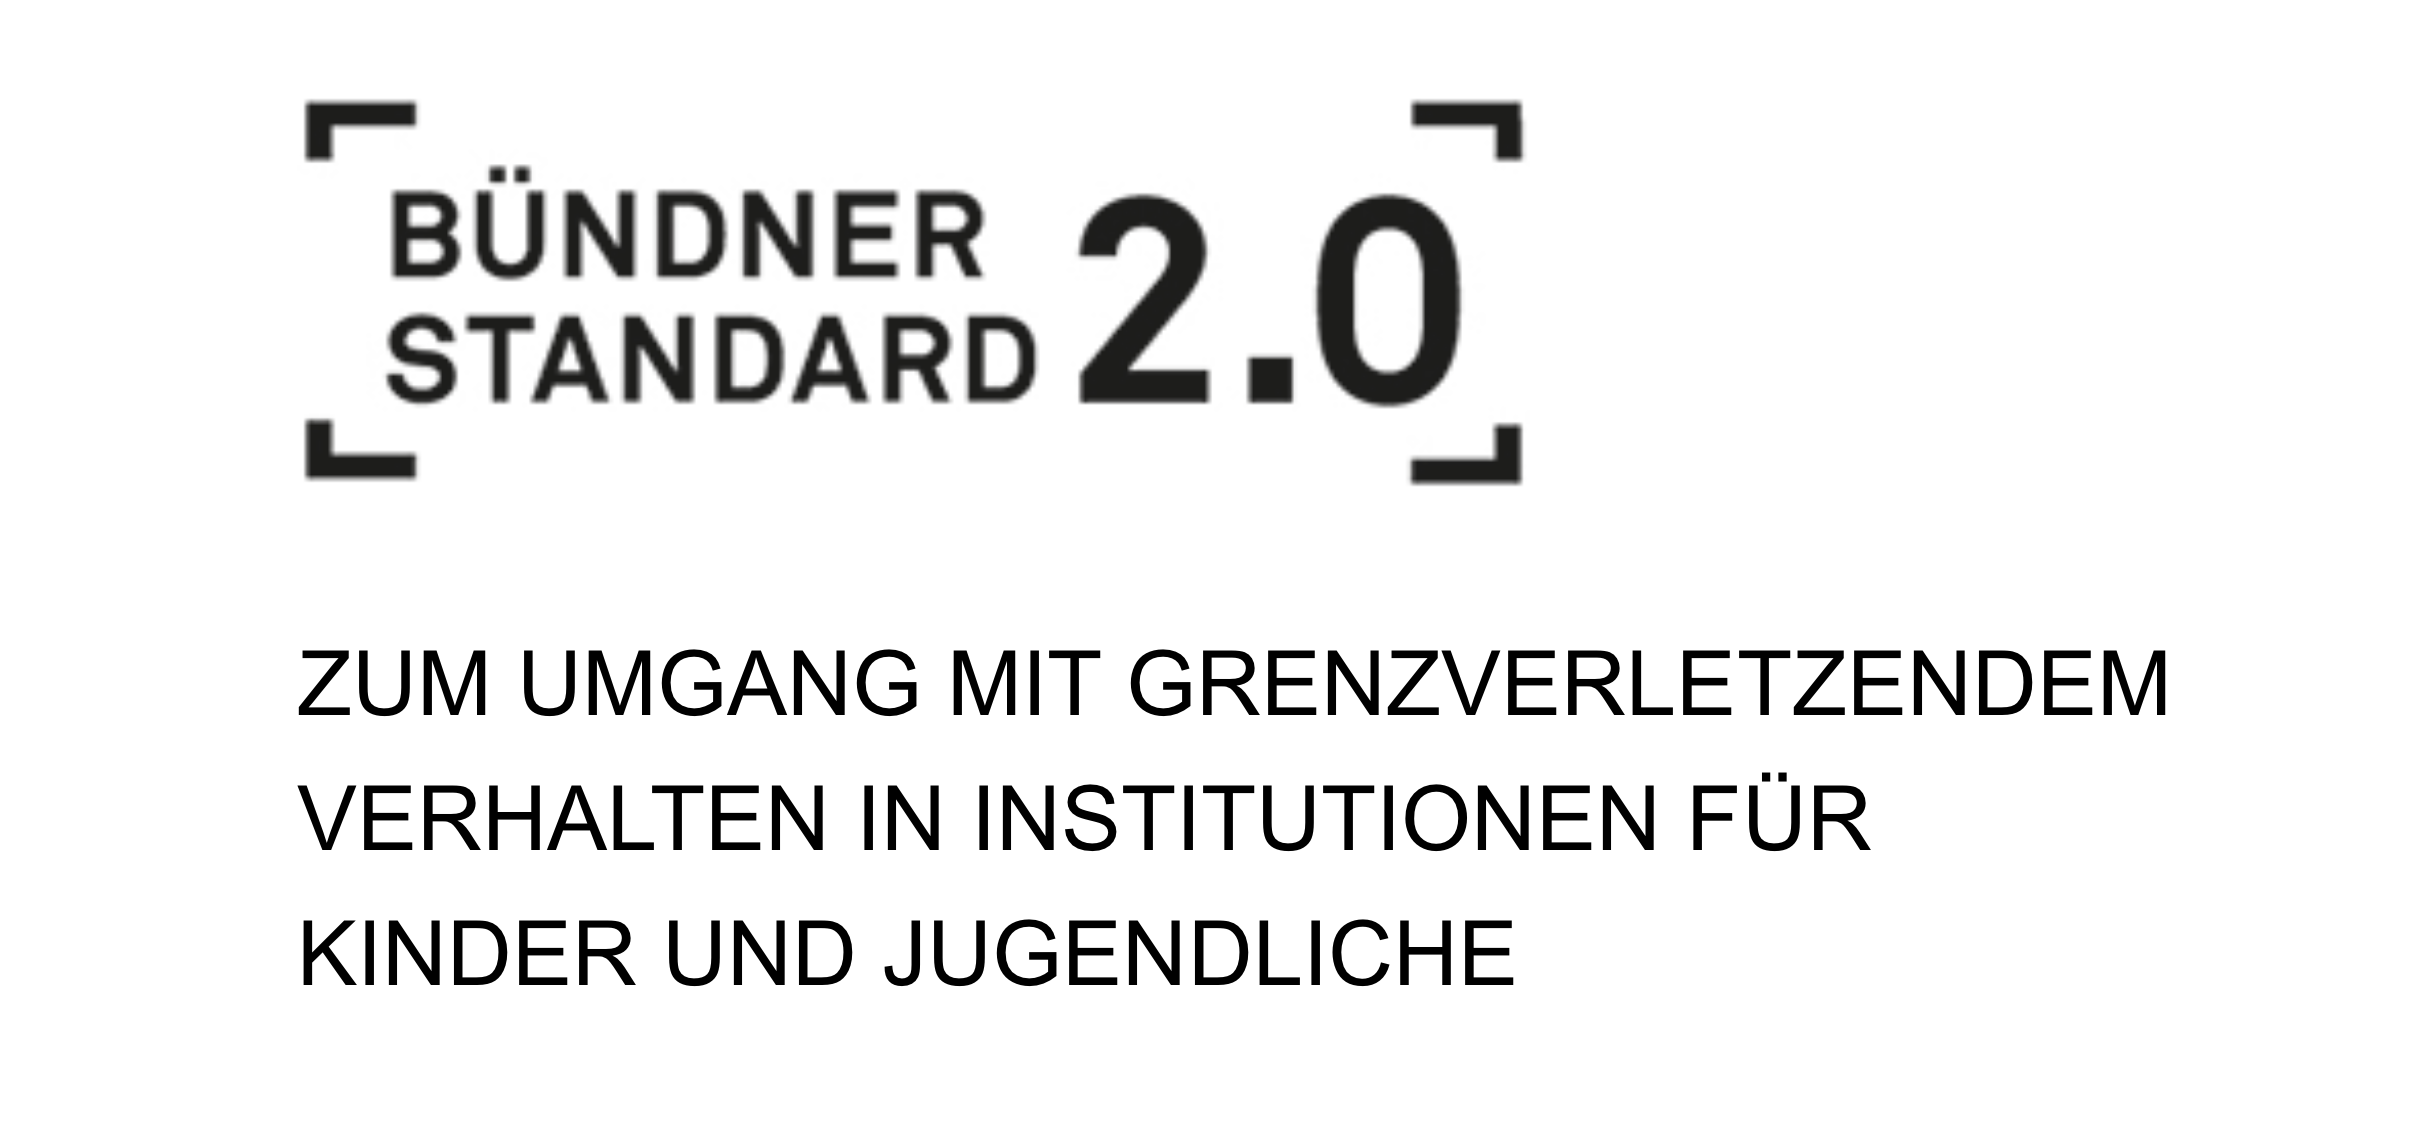 Bündner Standard